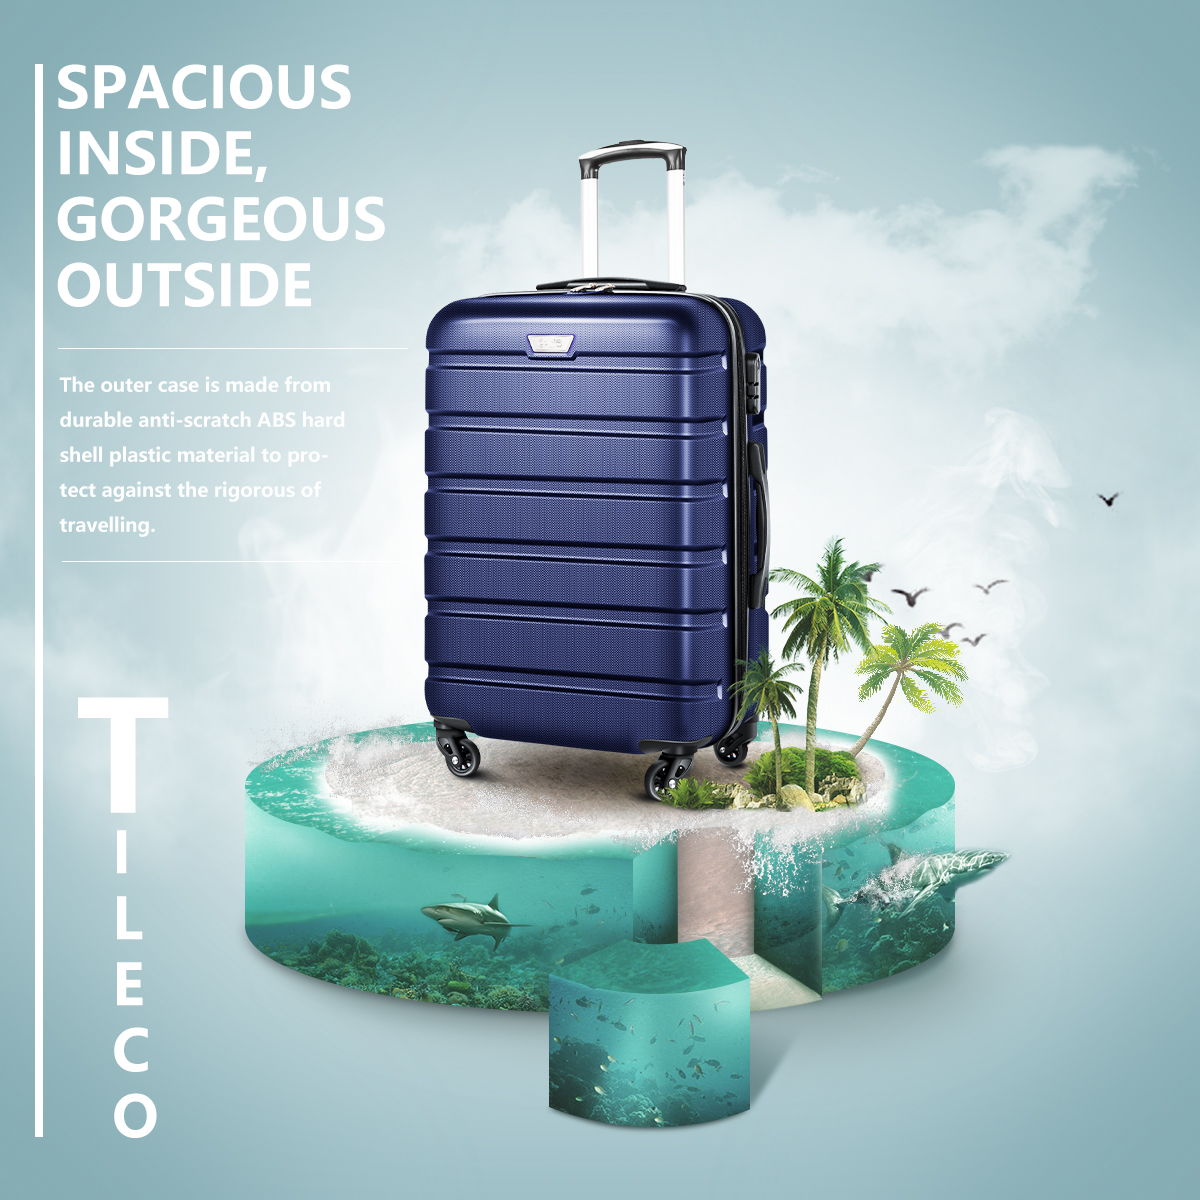 COOLIFE Luggage 3 Piece Set Suitcase Spinner Hardshell Lightweight TSA Lock  YD13